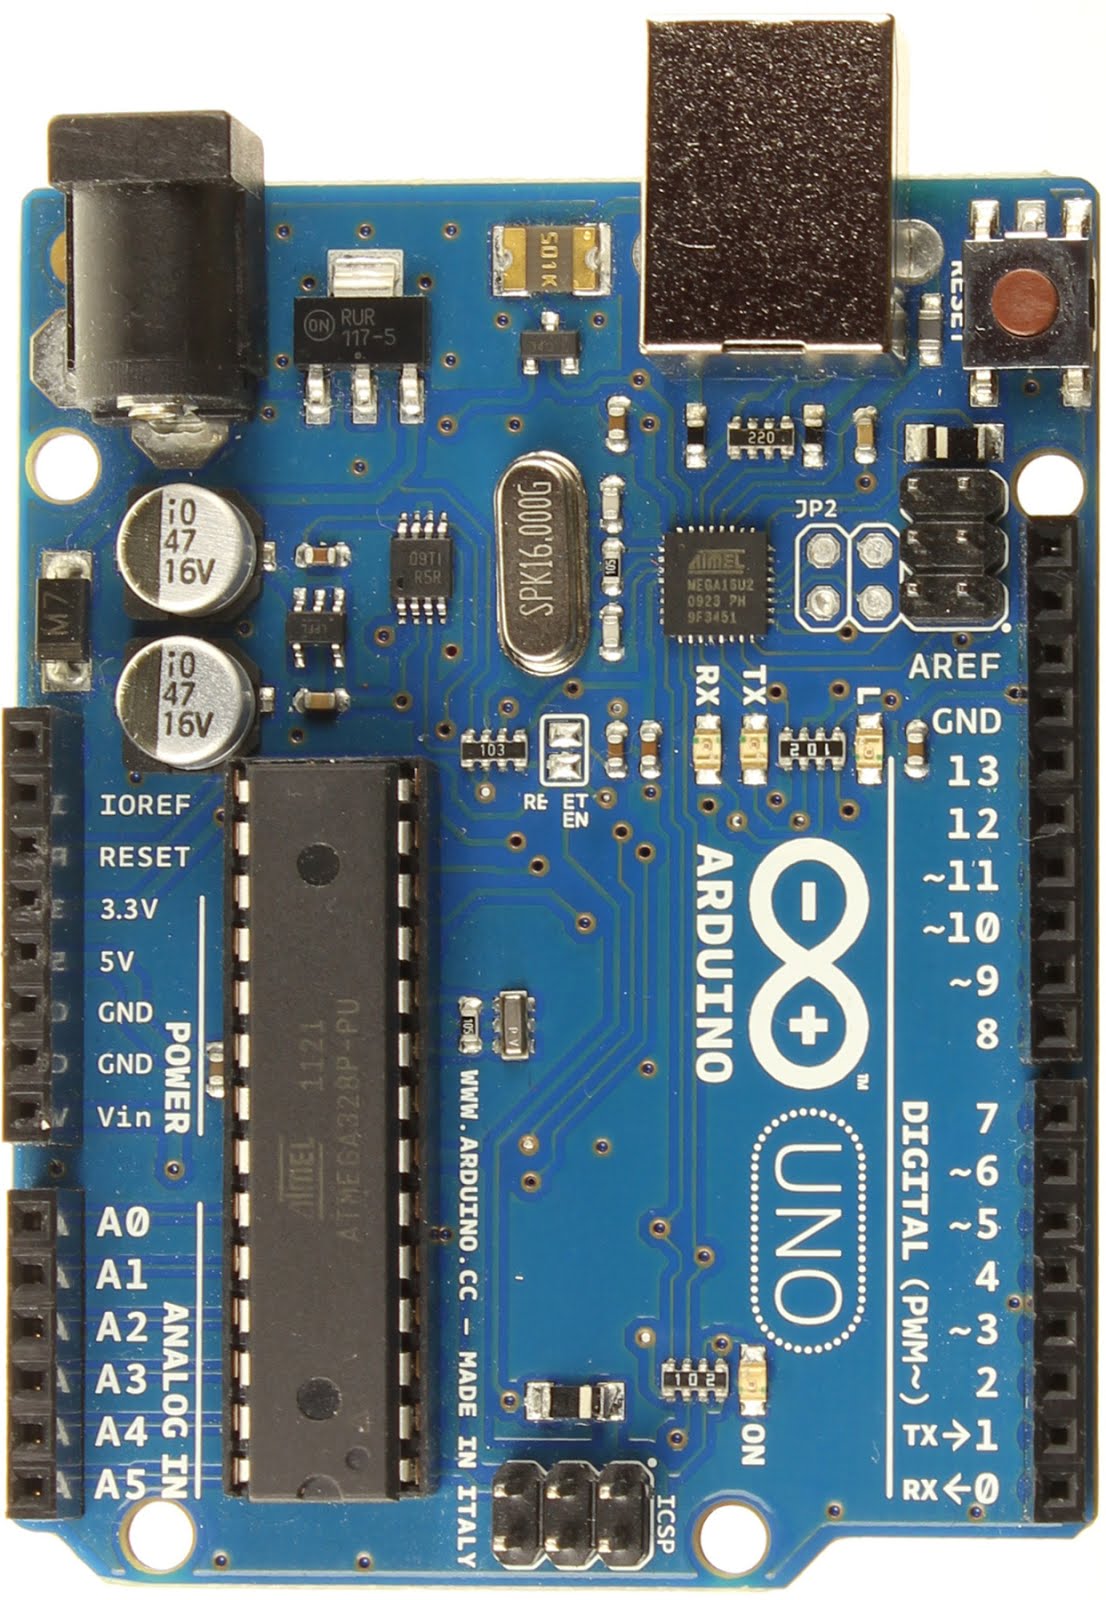 Interfacing Arduino Uno With Pir Motion Sensor Arduino Project Hub - Vrogue